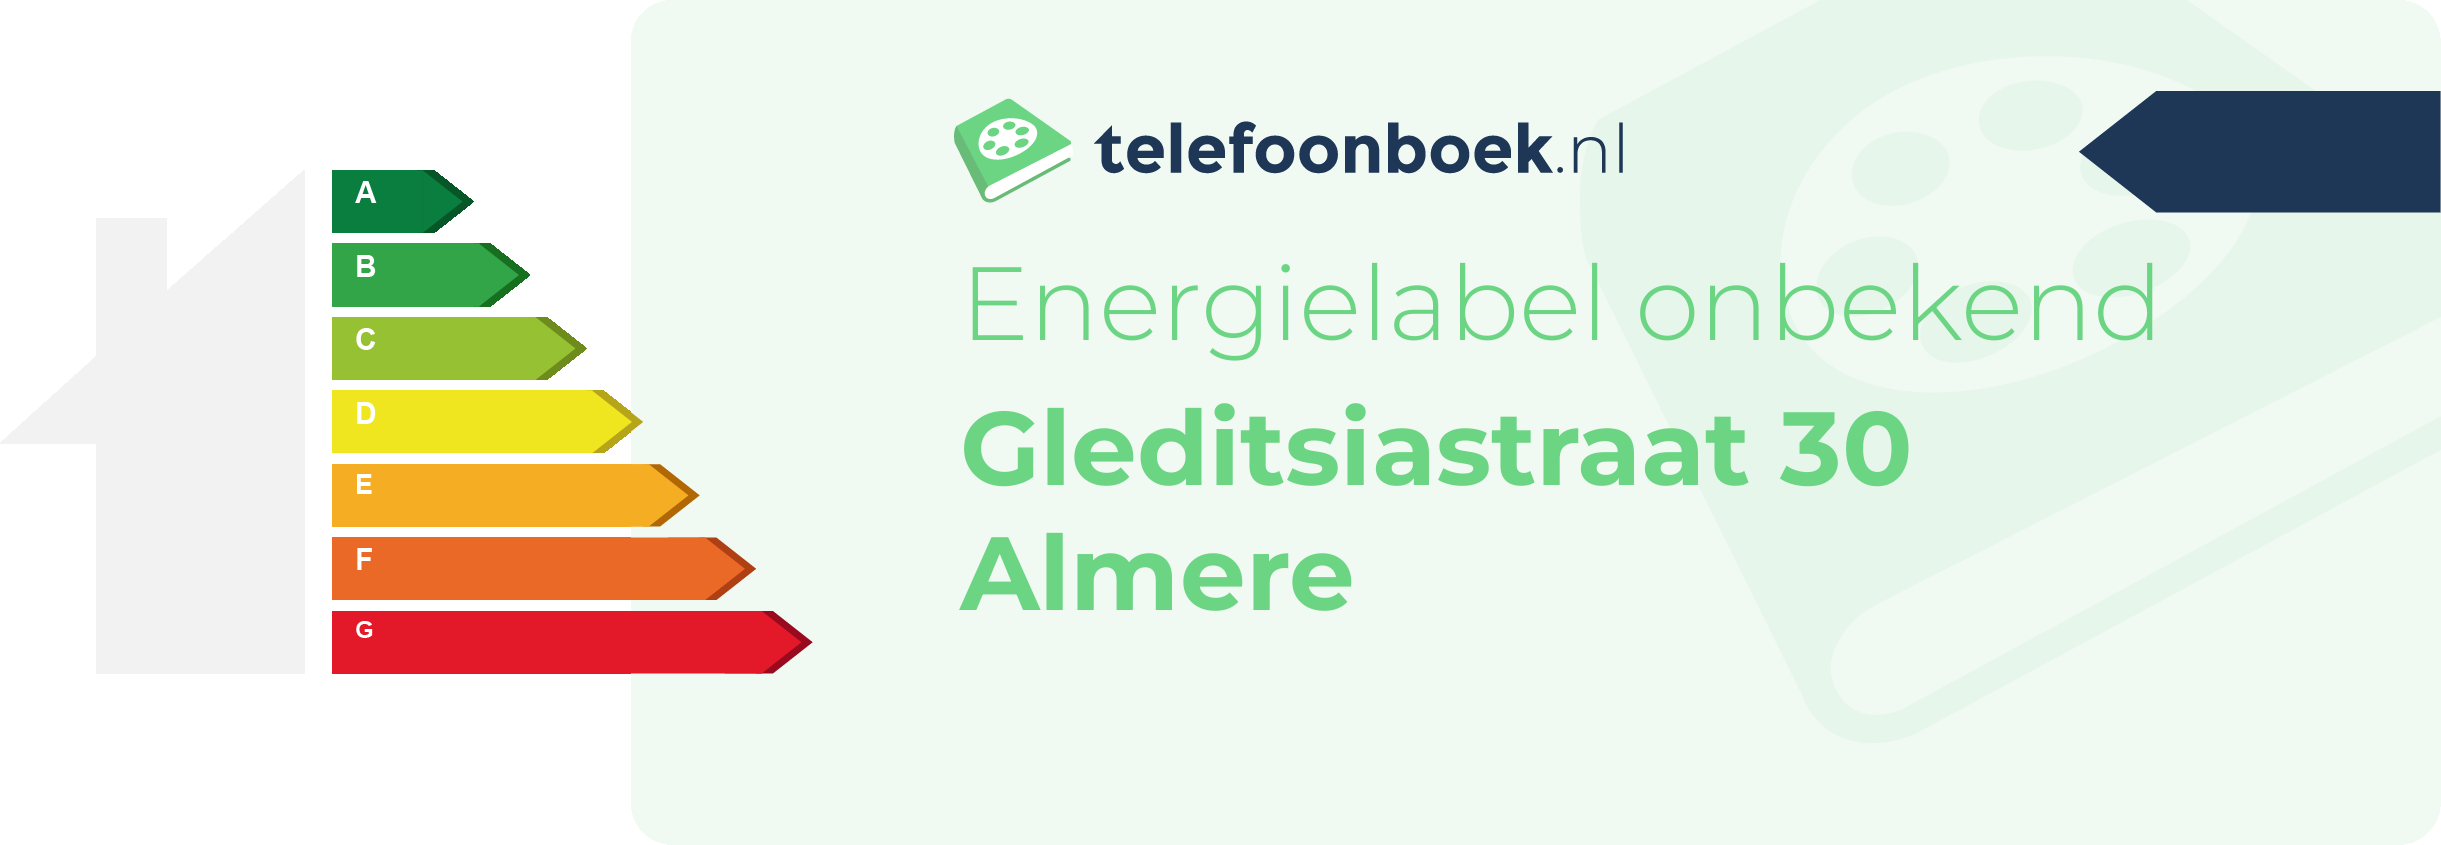 Energielabel Gleditsiastraat 30 Almere